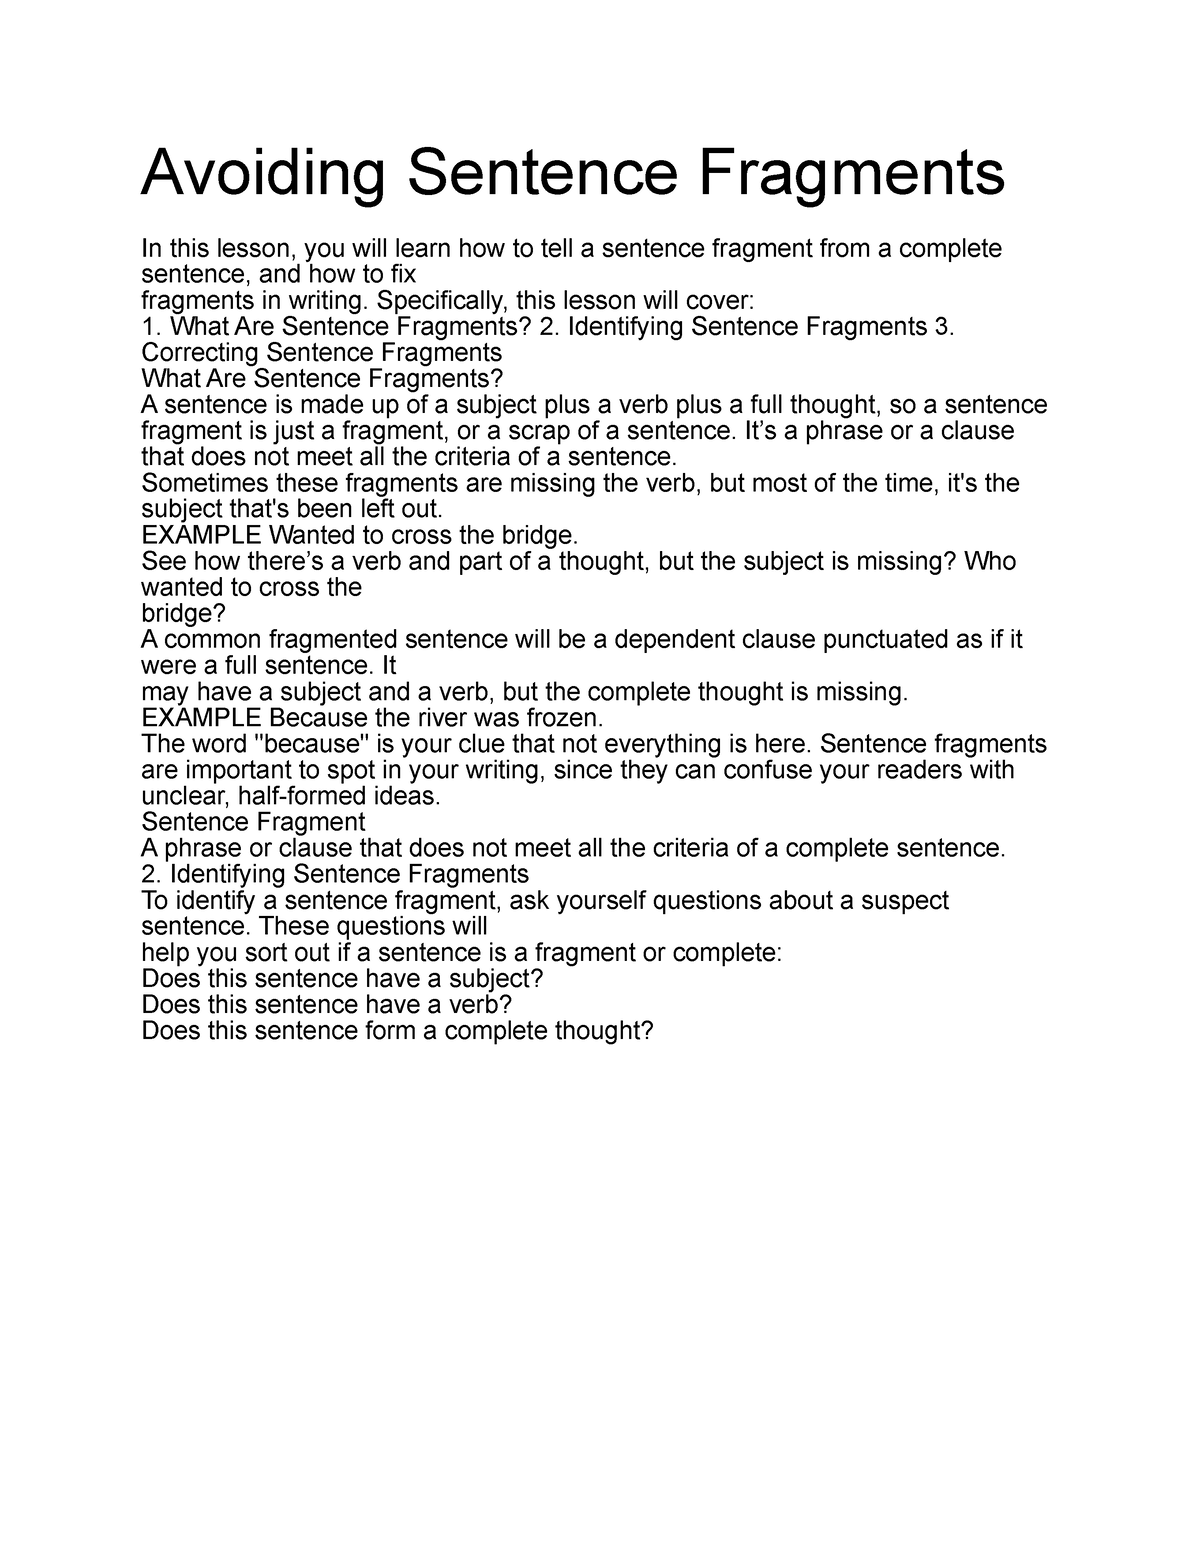 Practice Worksheet A Avoiding Sentence Fragments